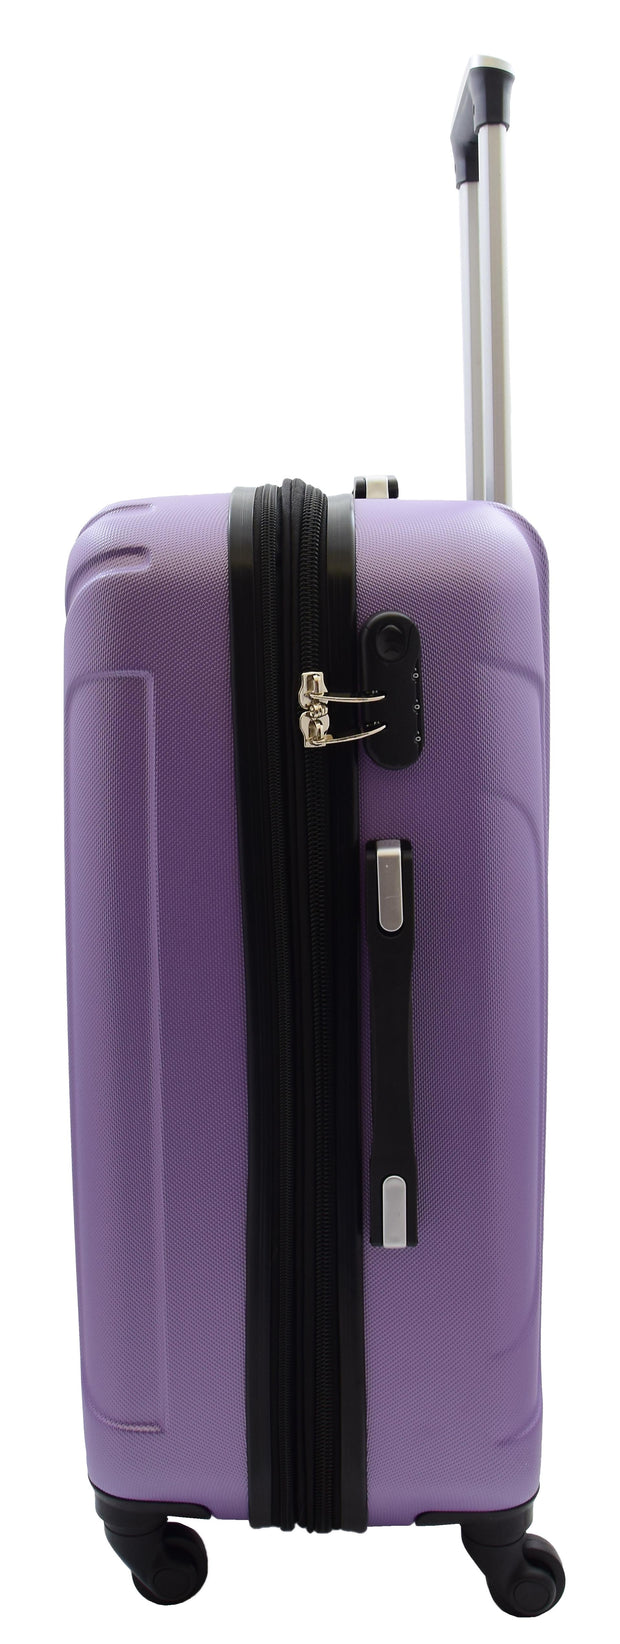 Robust 4 Wheel Suitcases Purple ABS Digit Lock Lightweight Luggage Travel Bag Skytrax